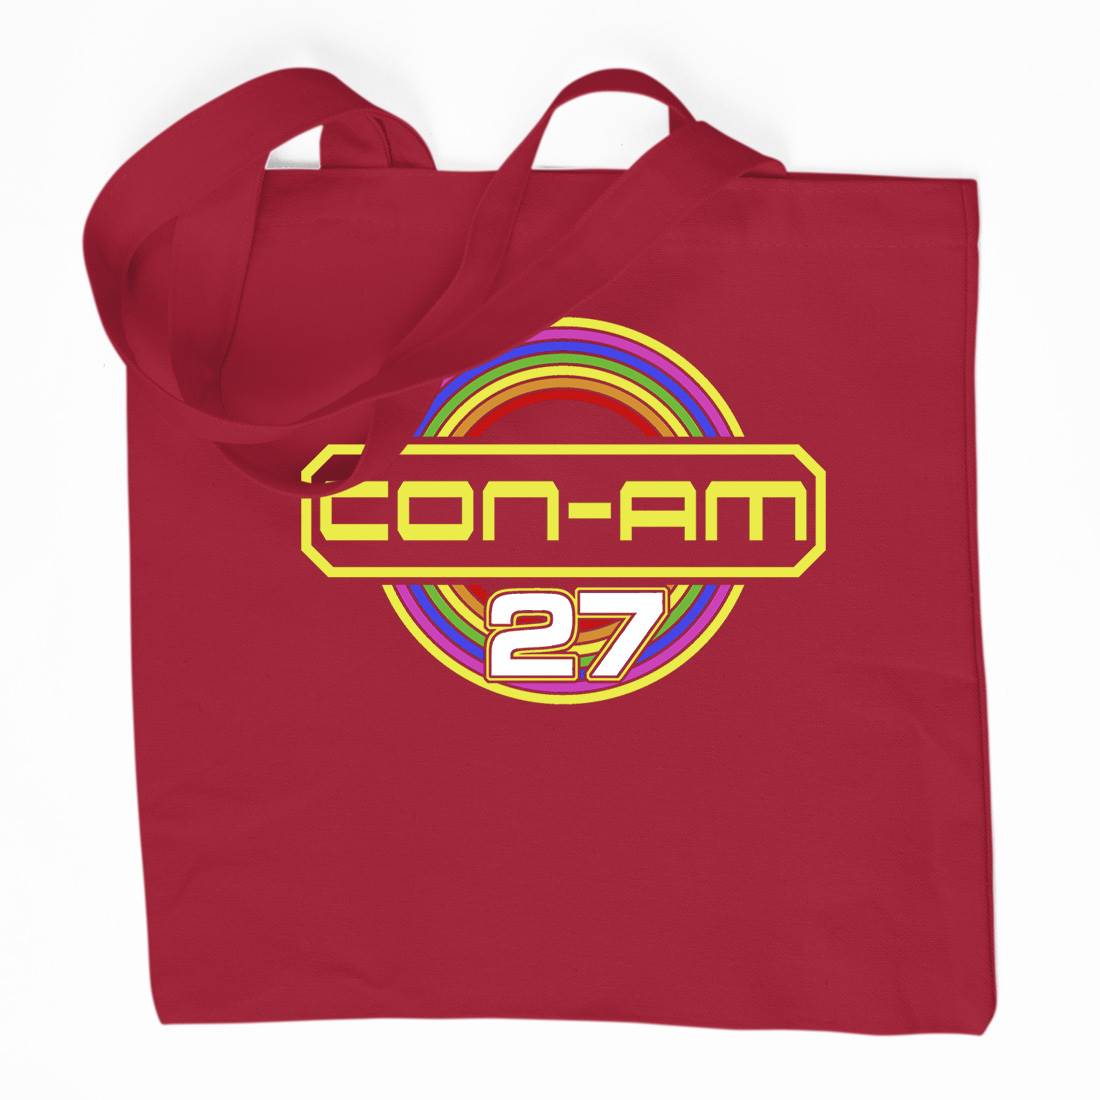 Con-Am 27 Organic Premium Cotton Tote Bag Space D414